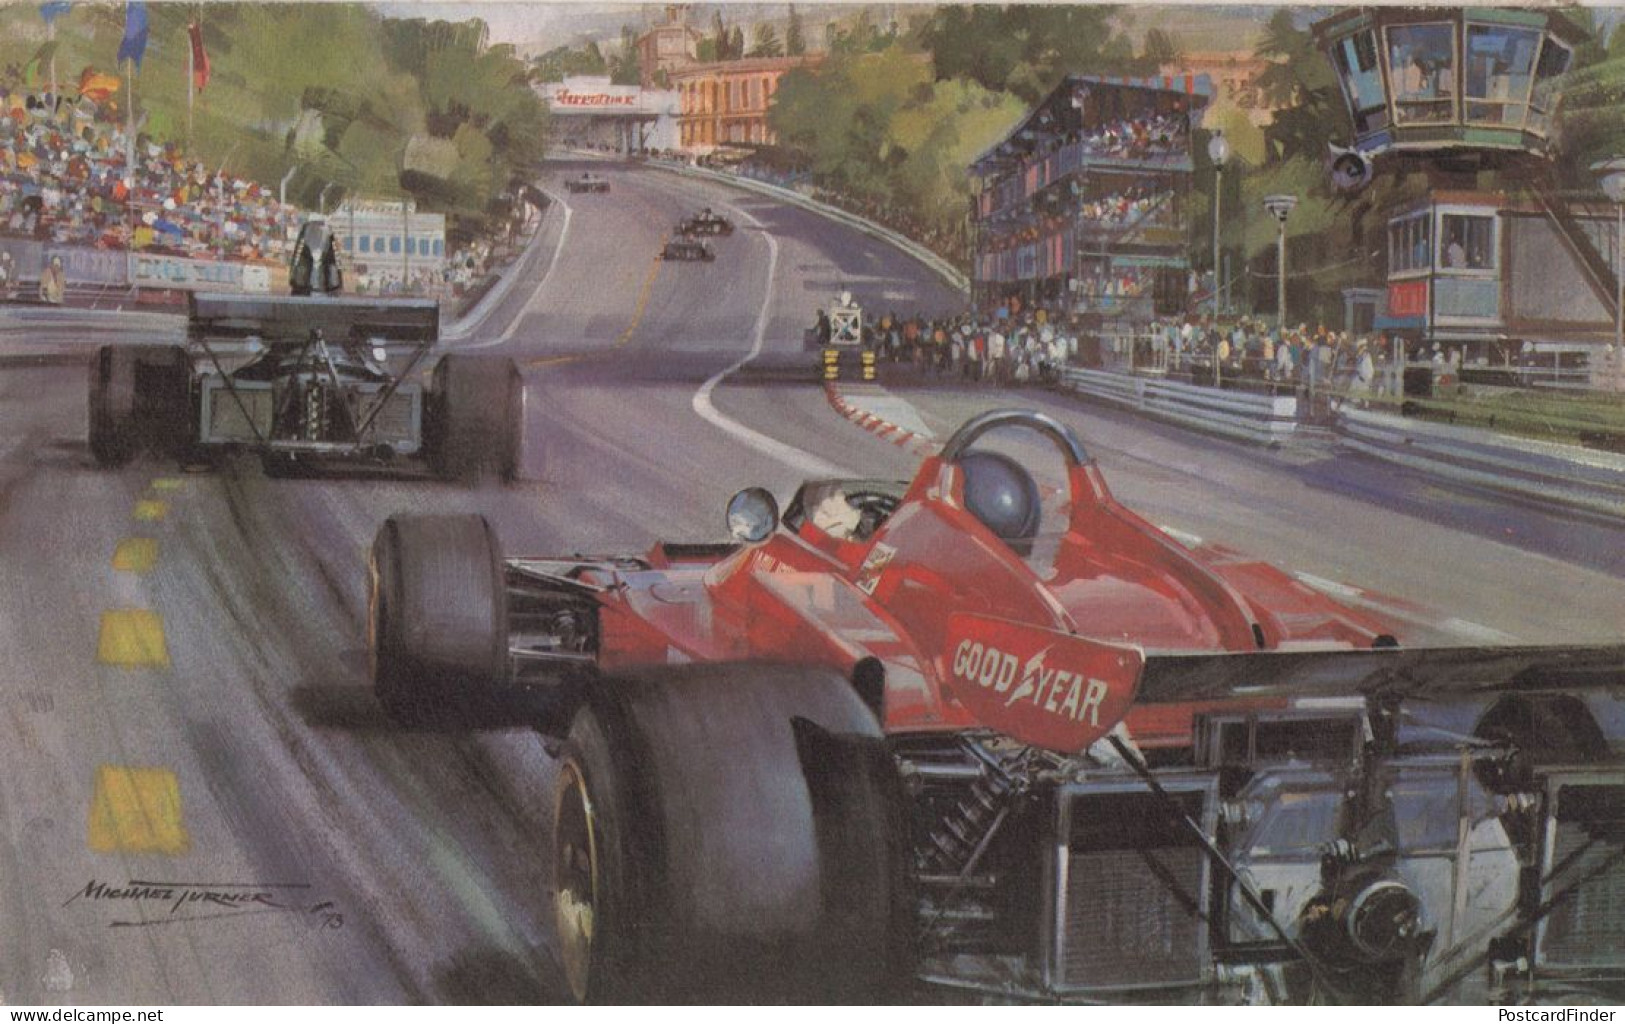 1973 Spanish Grand Prix F1 Jacky Ickx Ferrari Vintage Painting Card - Grand Prix / F1